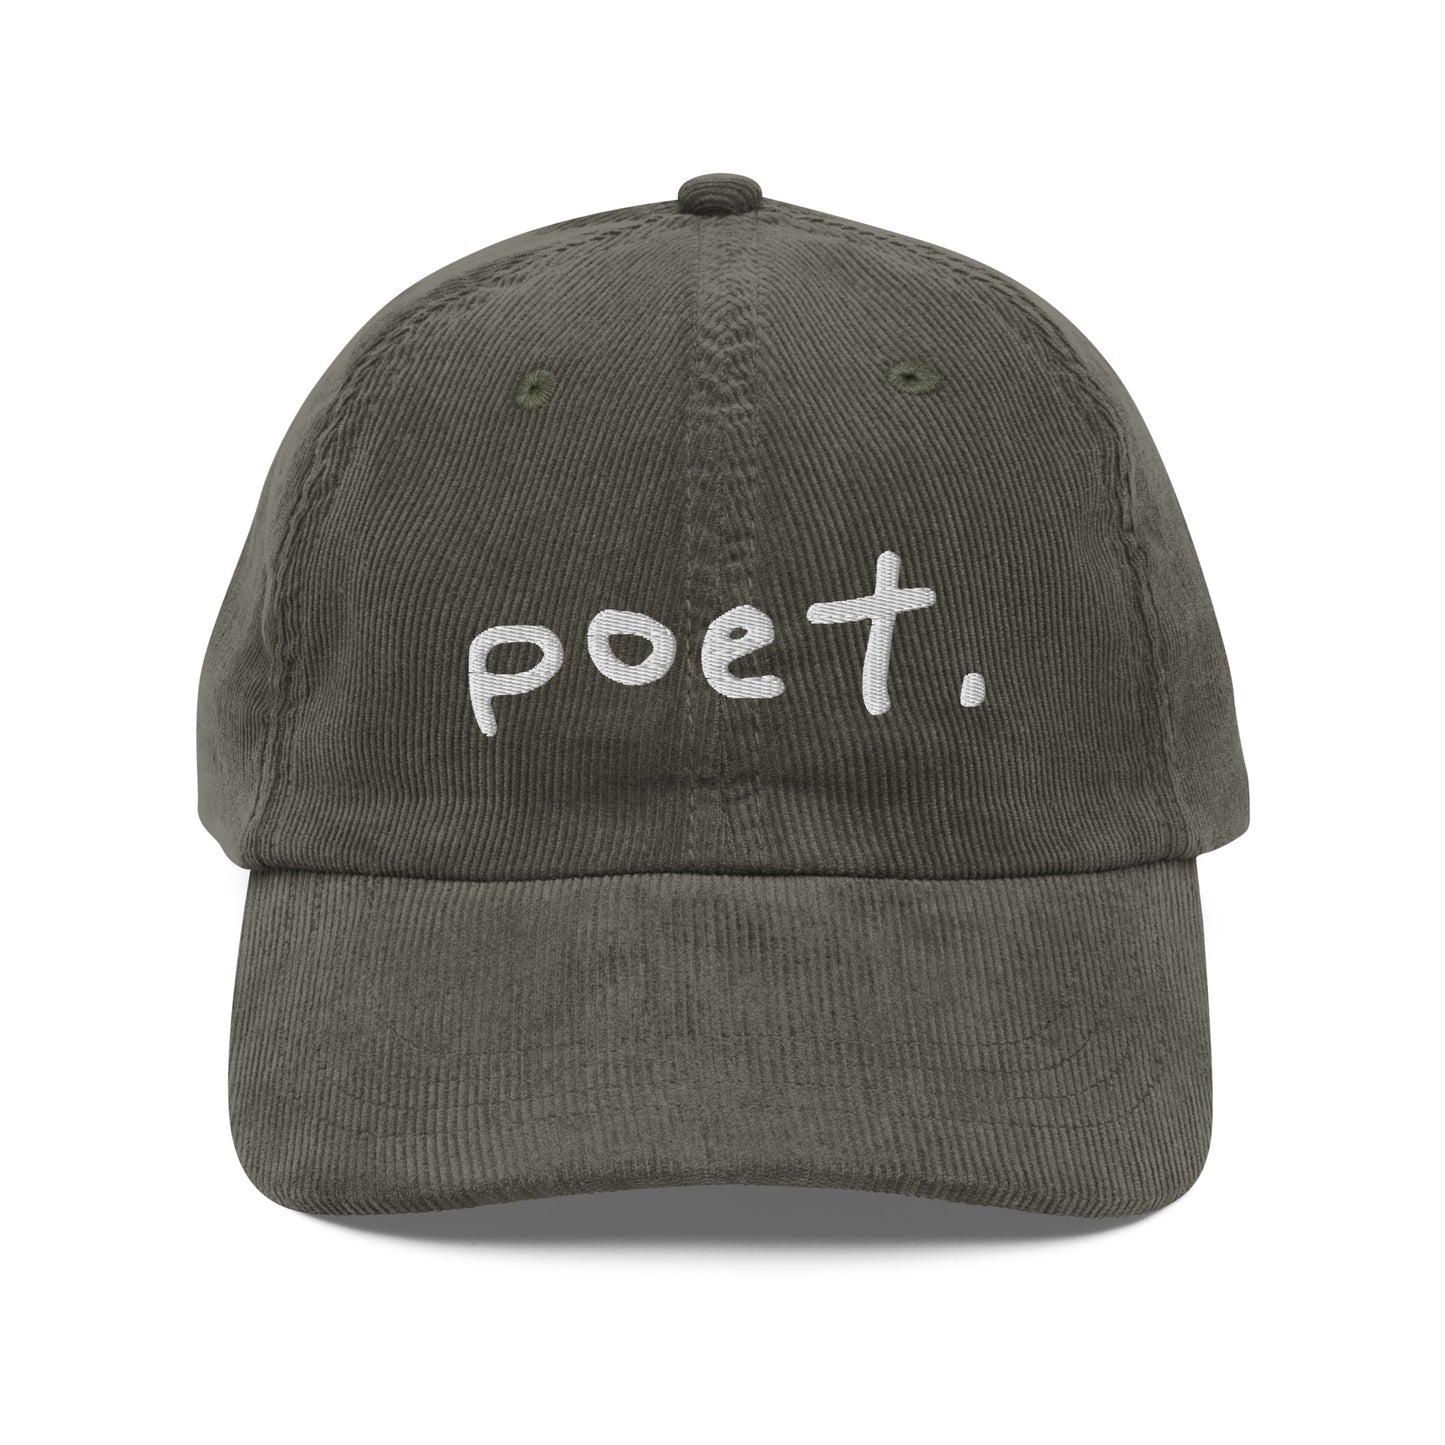 poet. vintage corduroy cap